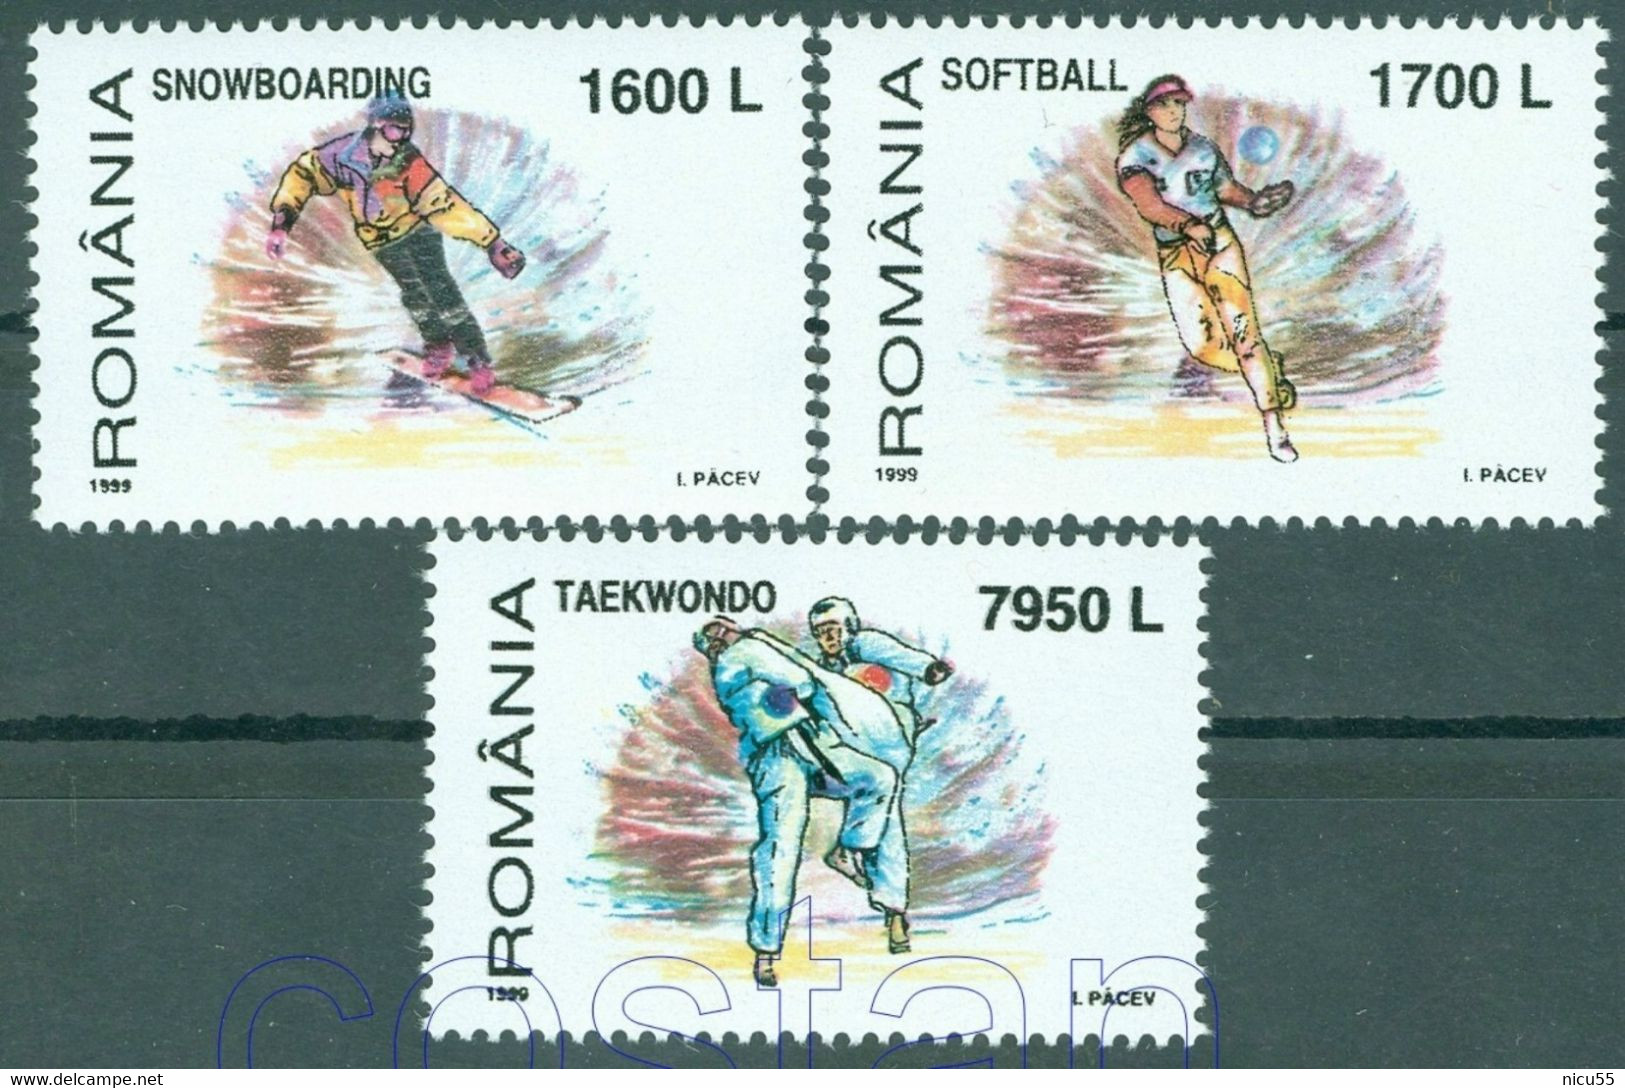 1999 Taekwondo/Tae Kwon Do,Softball,Snowboarding,New Olympic SPORTS,Romania,Mi.5441/Y.4568,MNH - Non Classés